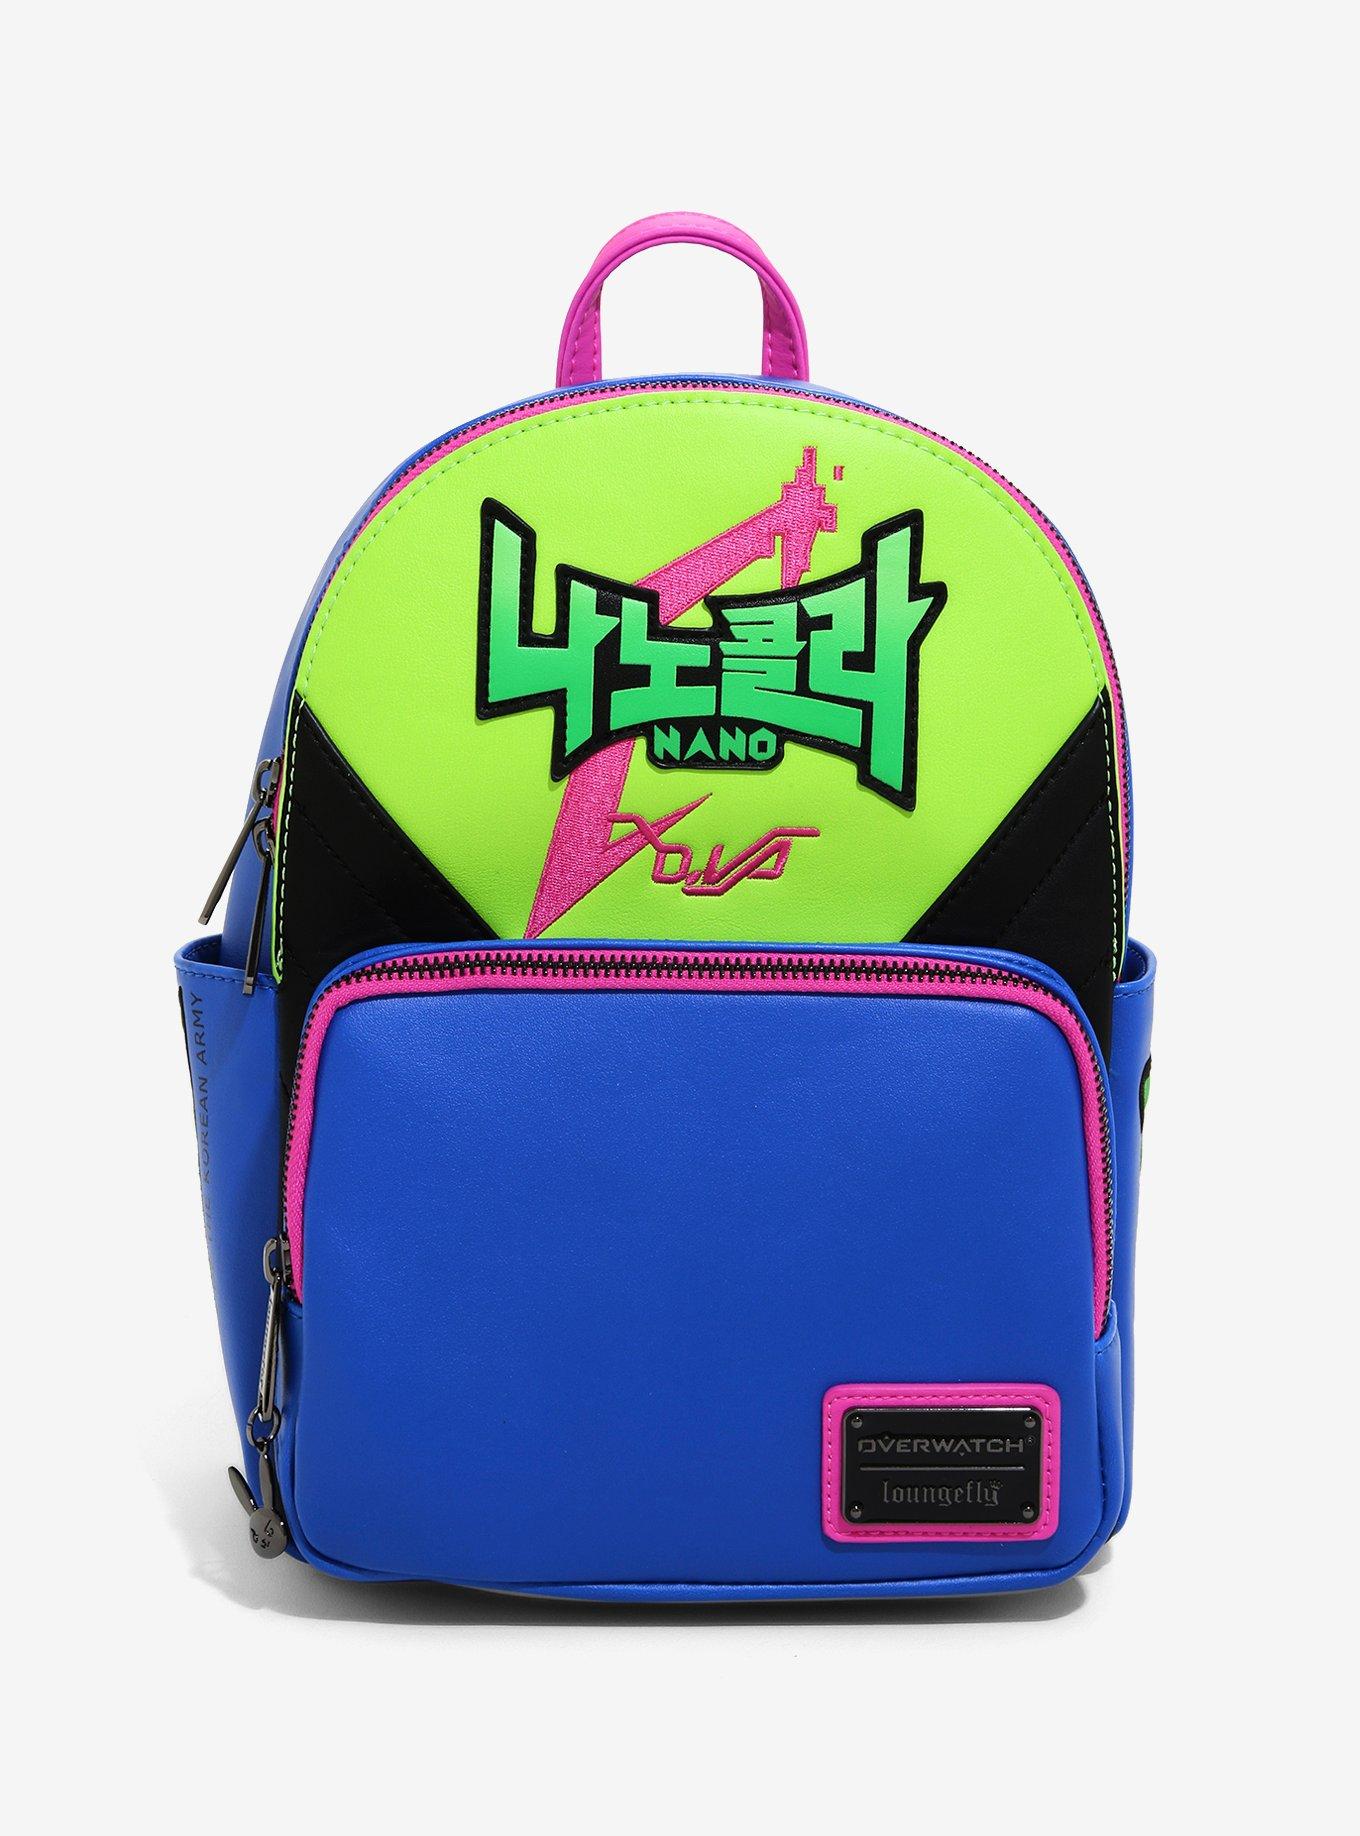 Loungefly Overwatch D.Va DVA Pink Mini Backpack Bag Brand New